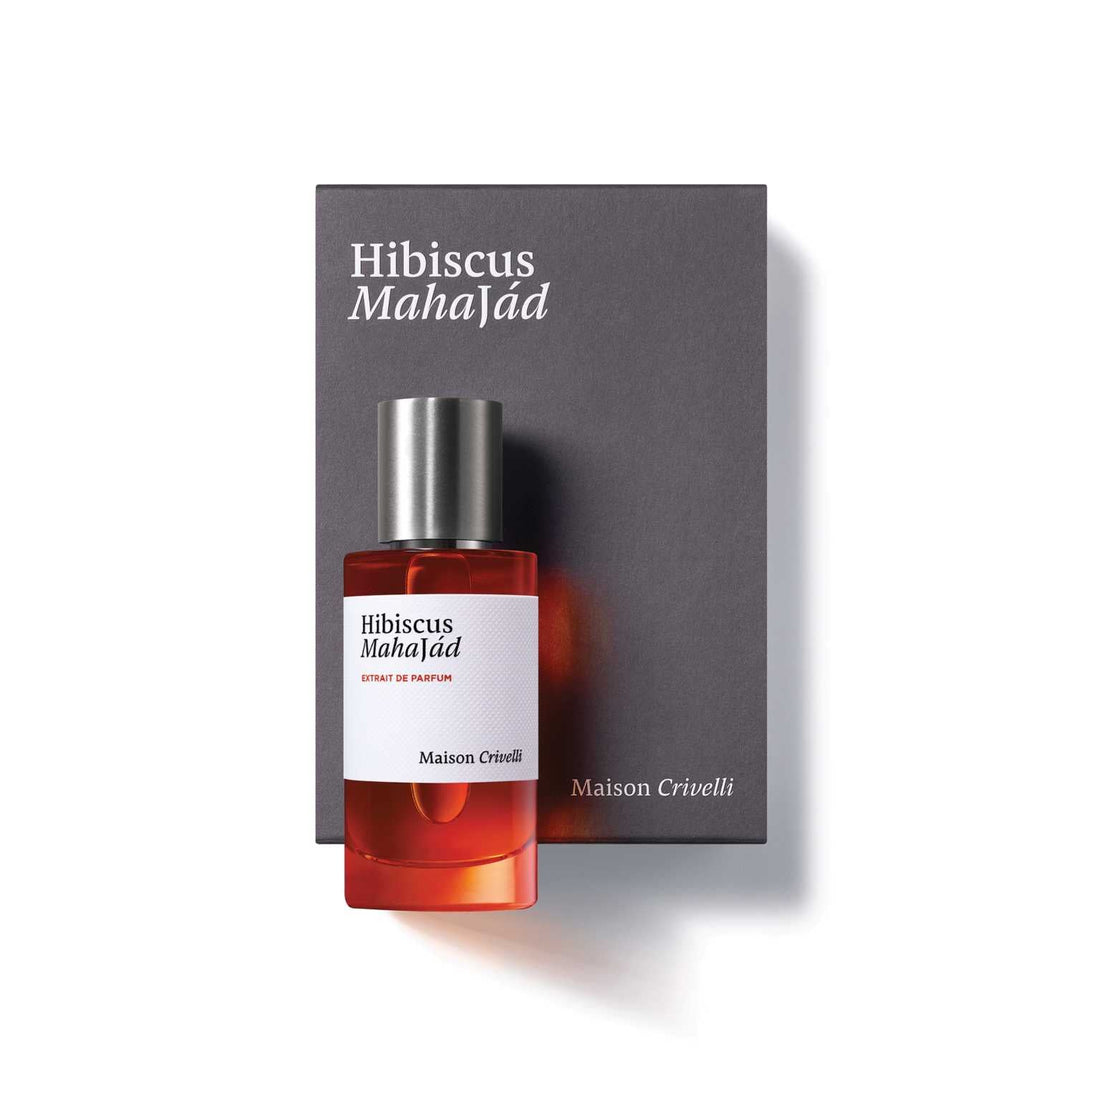 Hibiscus Mahajad Maison Crivelli - 50 ml